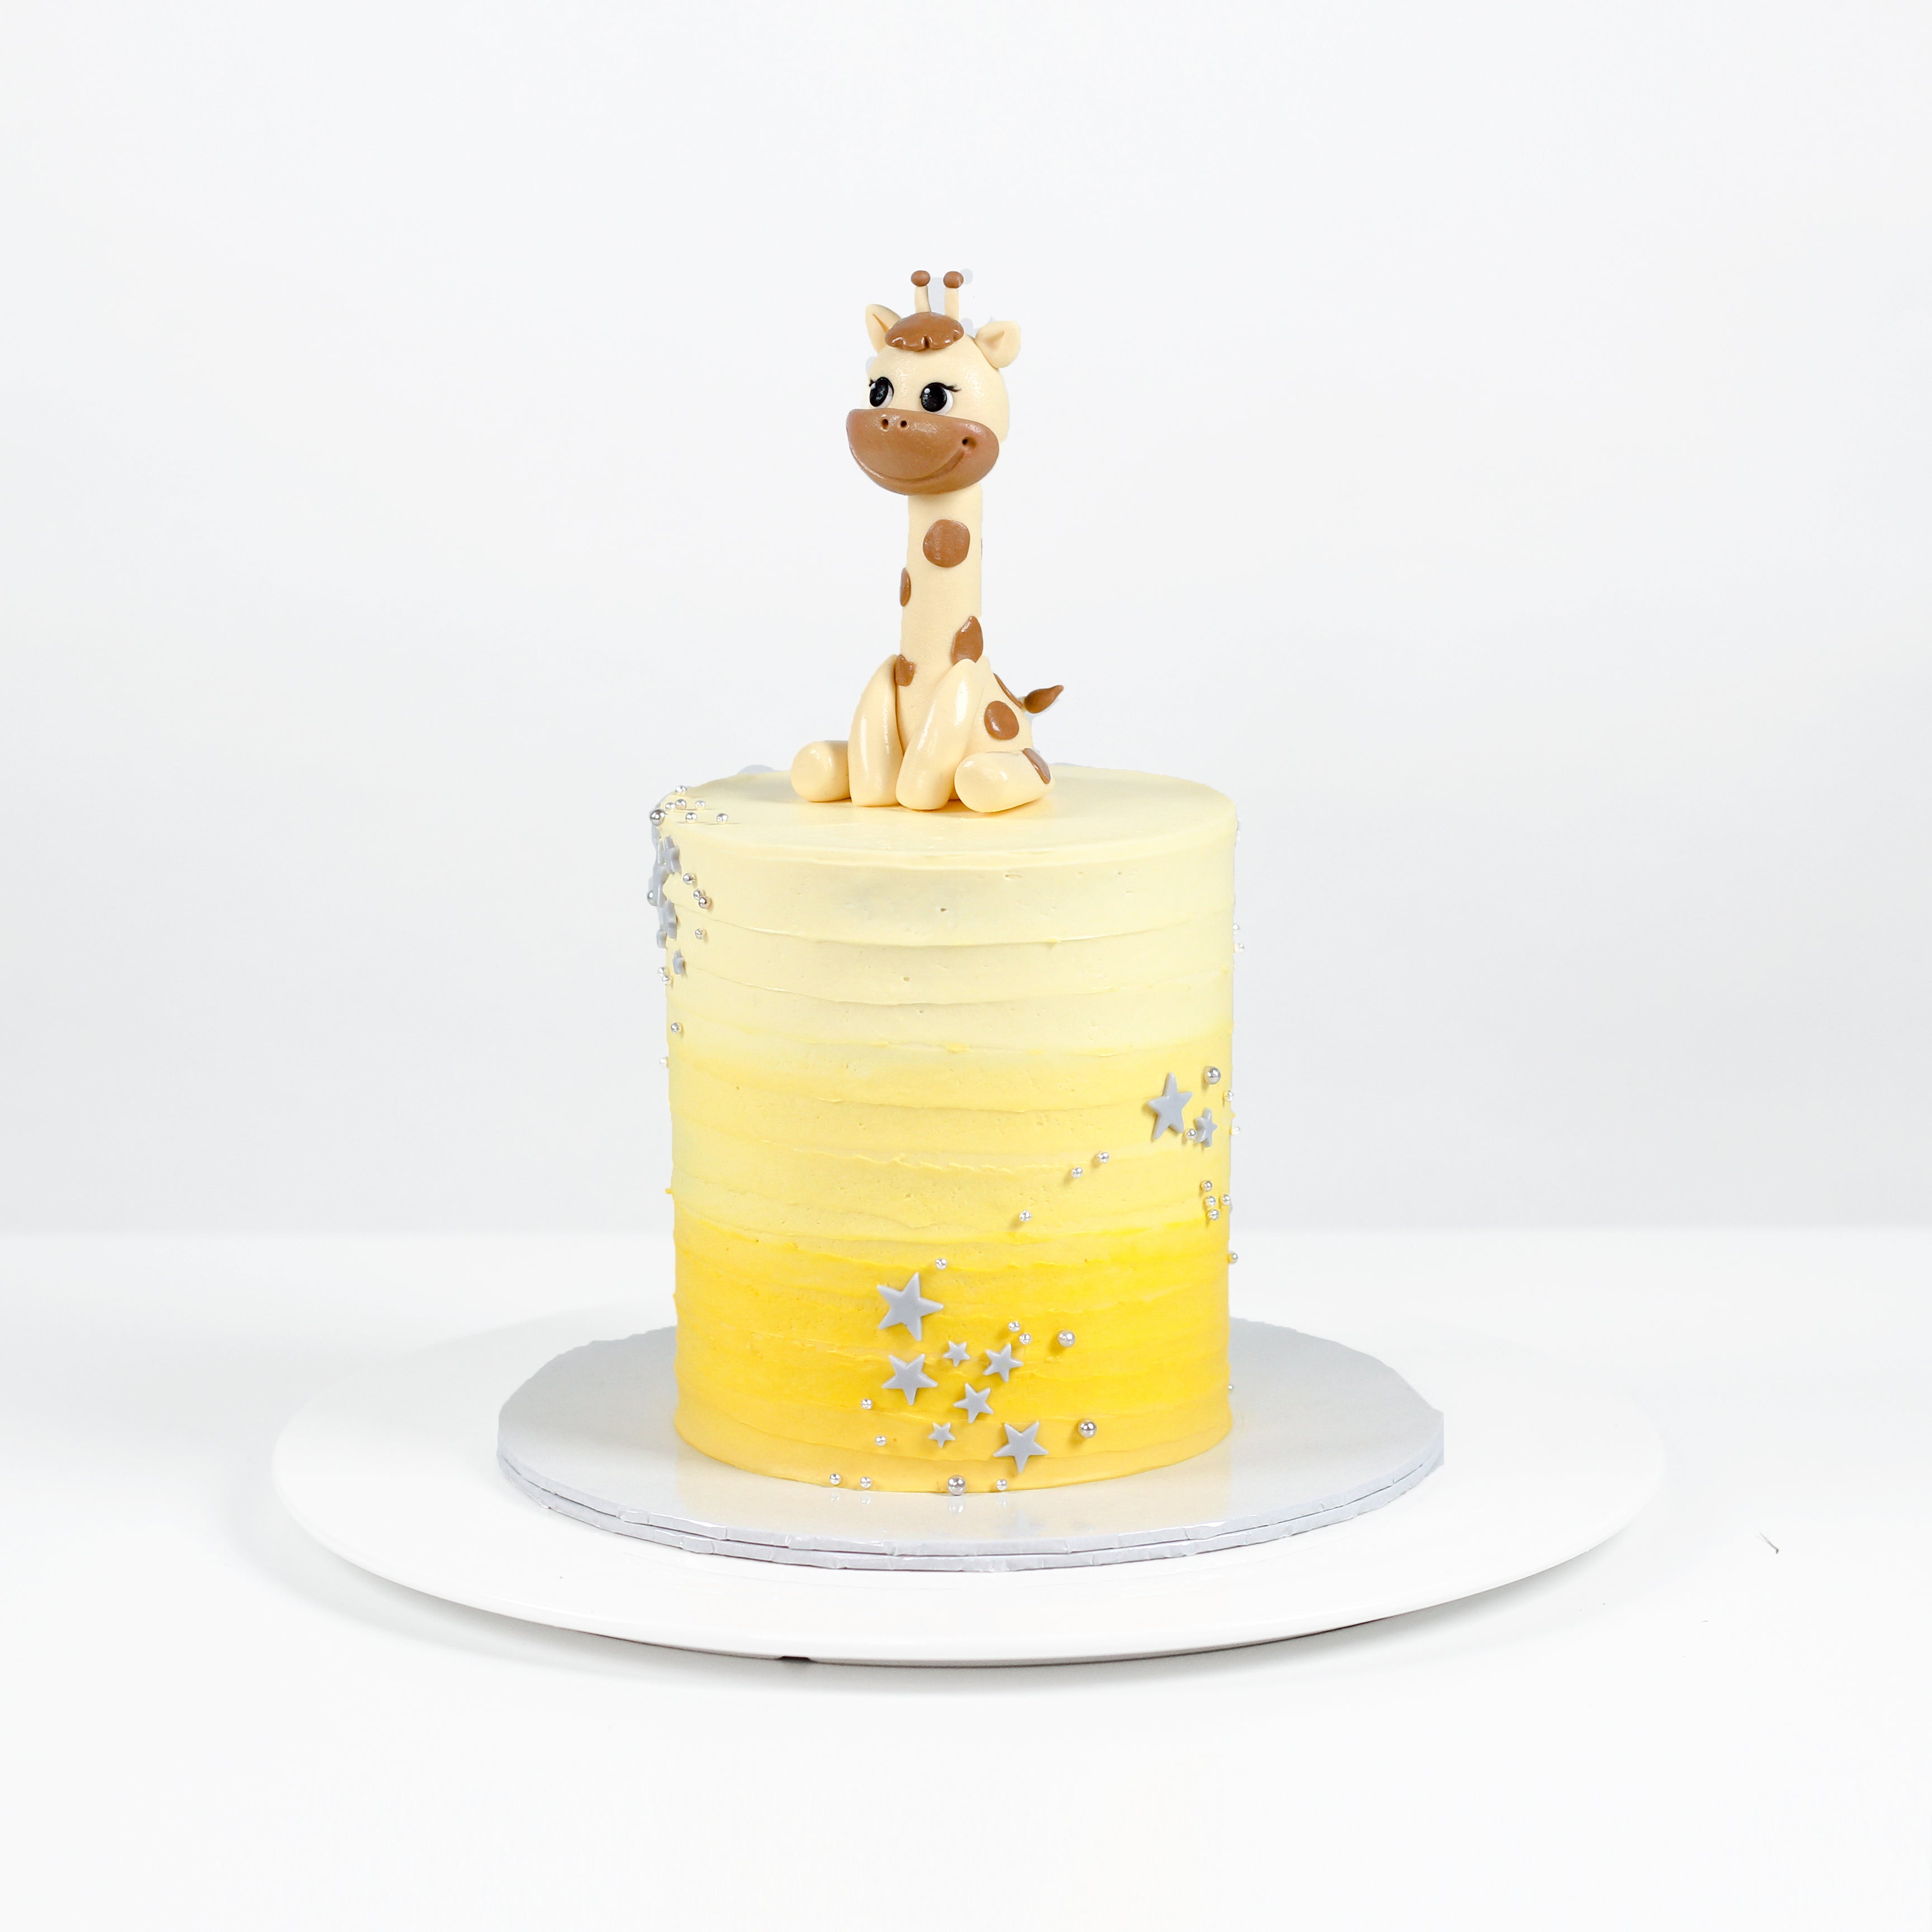 Giraffe Birthday Cake 🦒... - The Tasty Little Cakery | Facebook